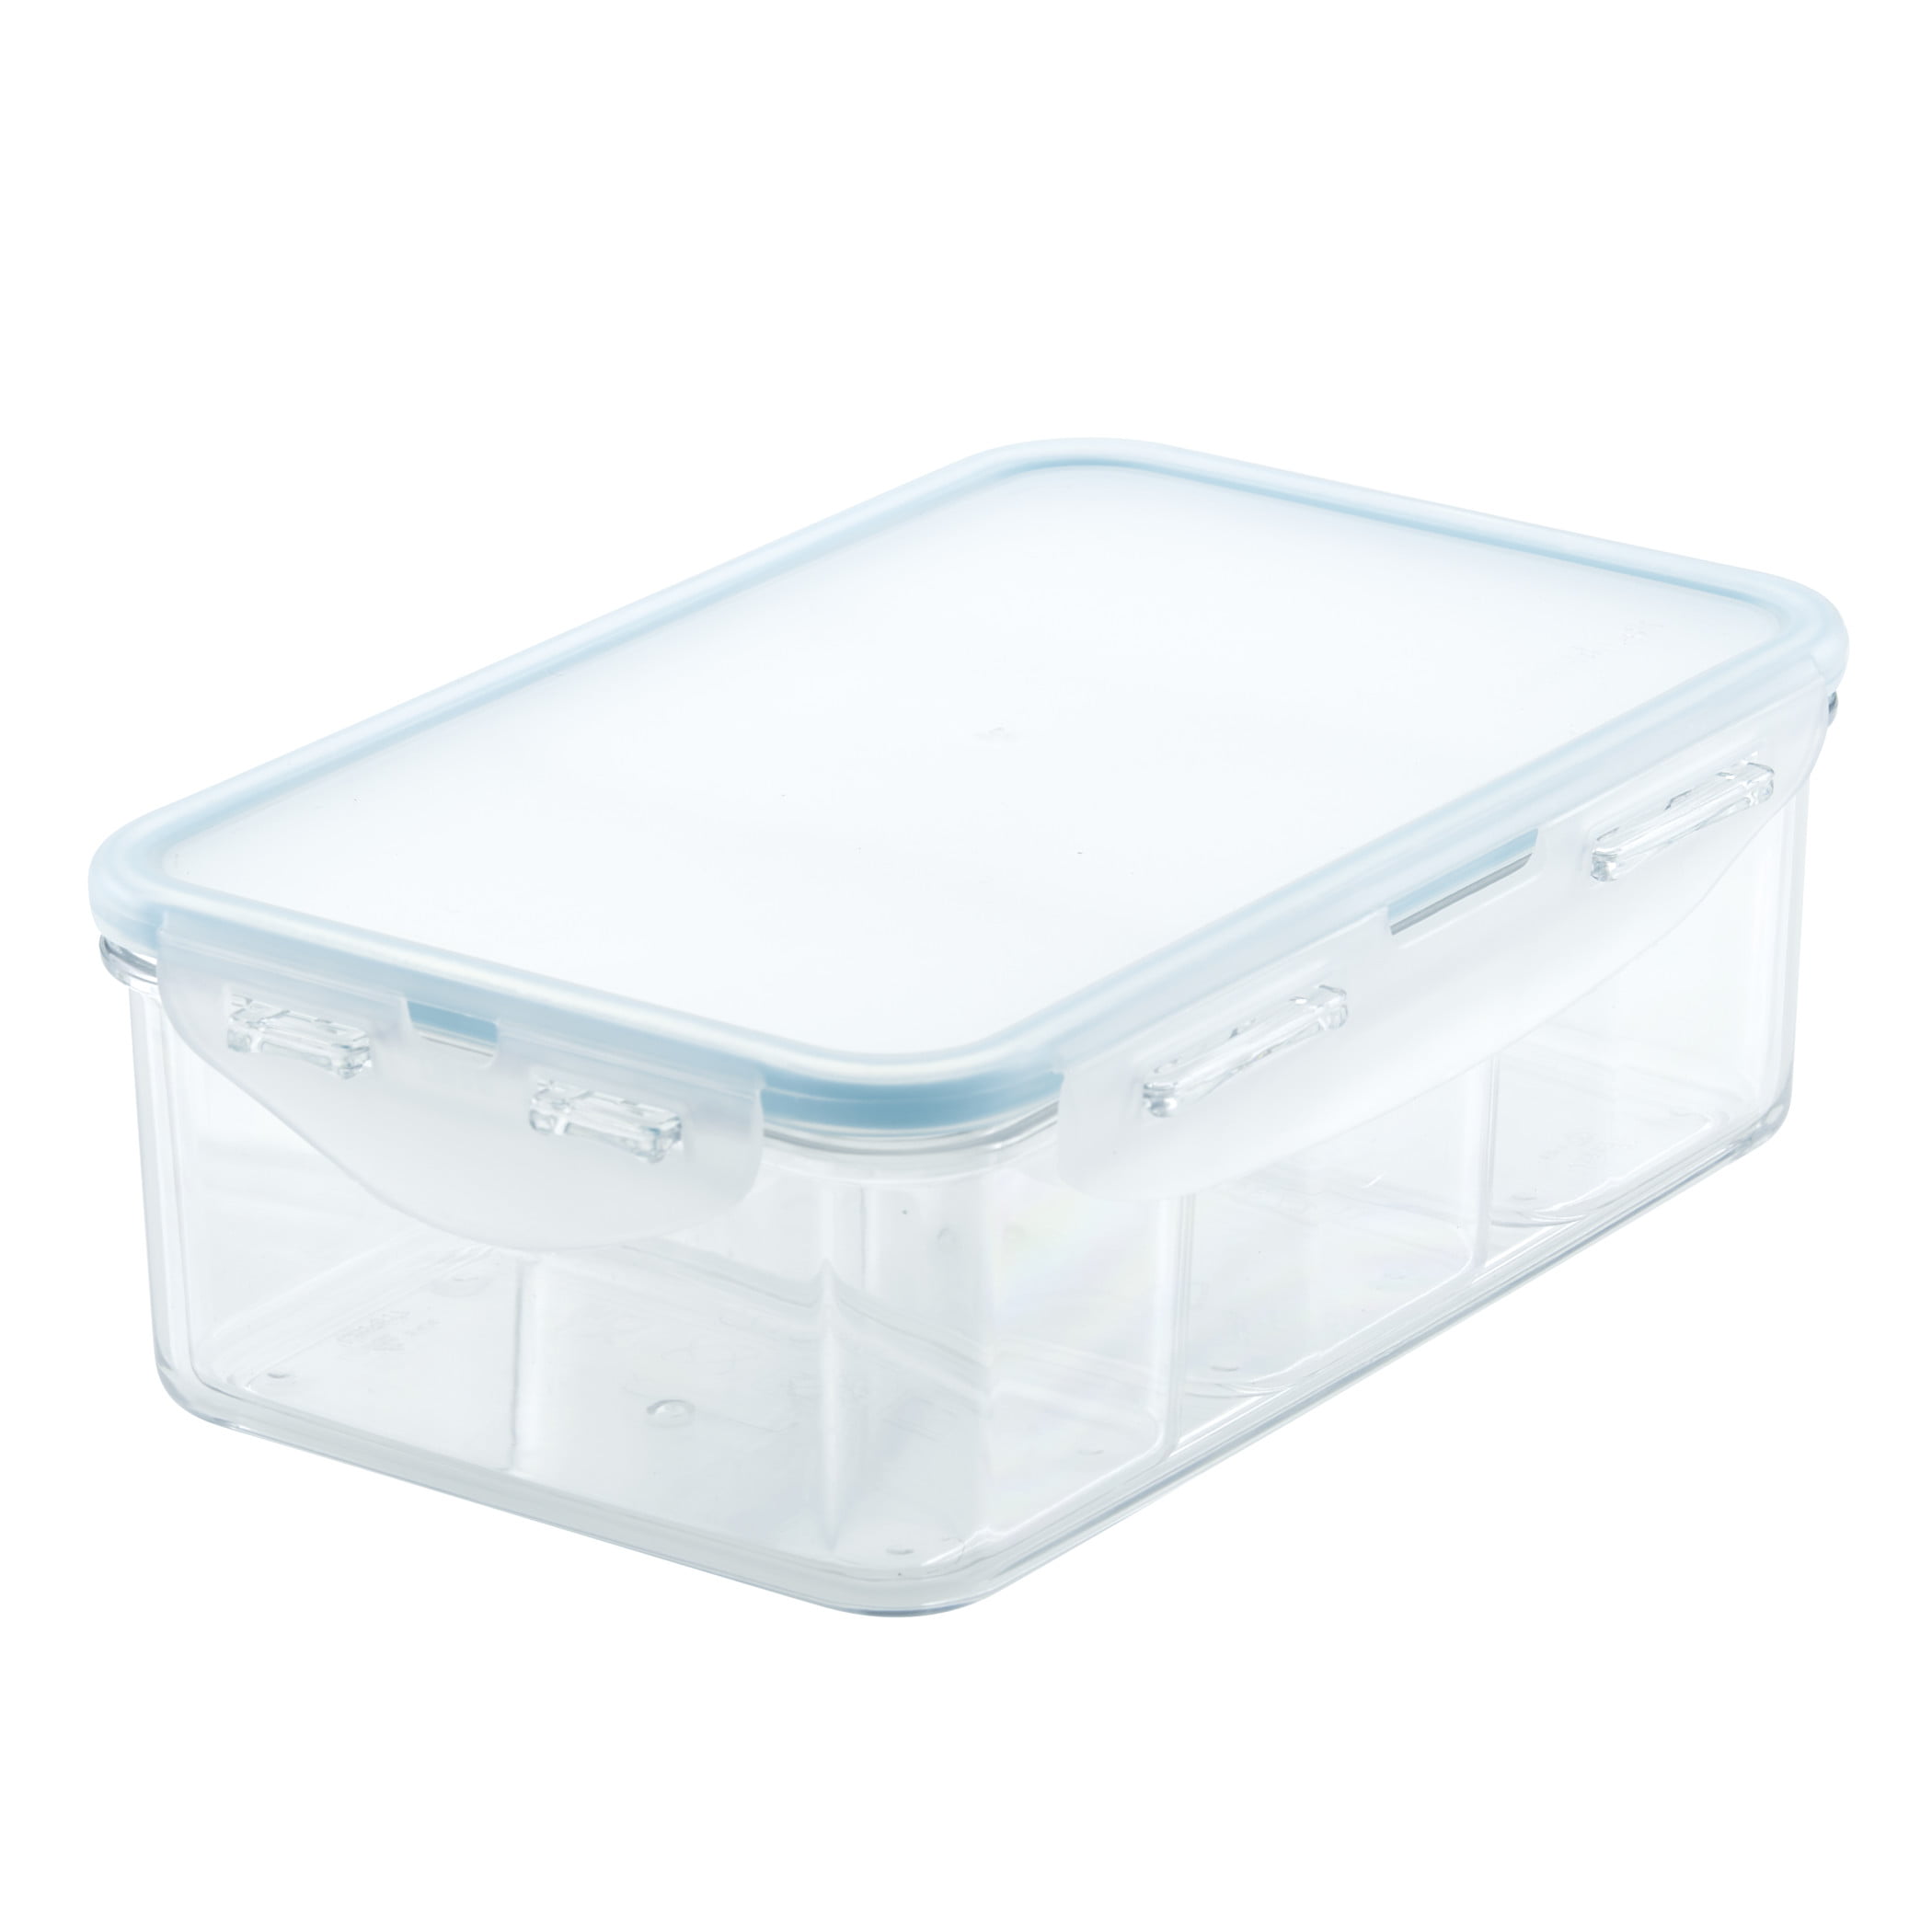 Lock&Lock Bisfree Modular Food Storage Sealed Container 33.8 oz Microwave Safe